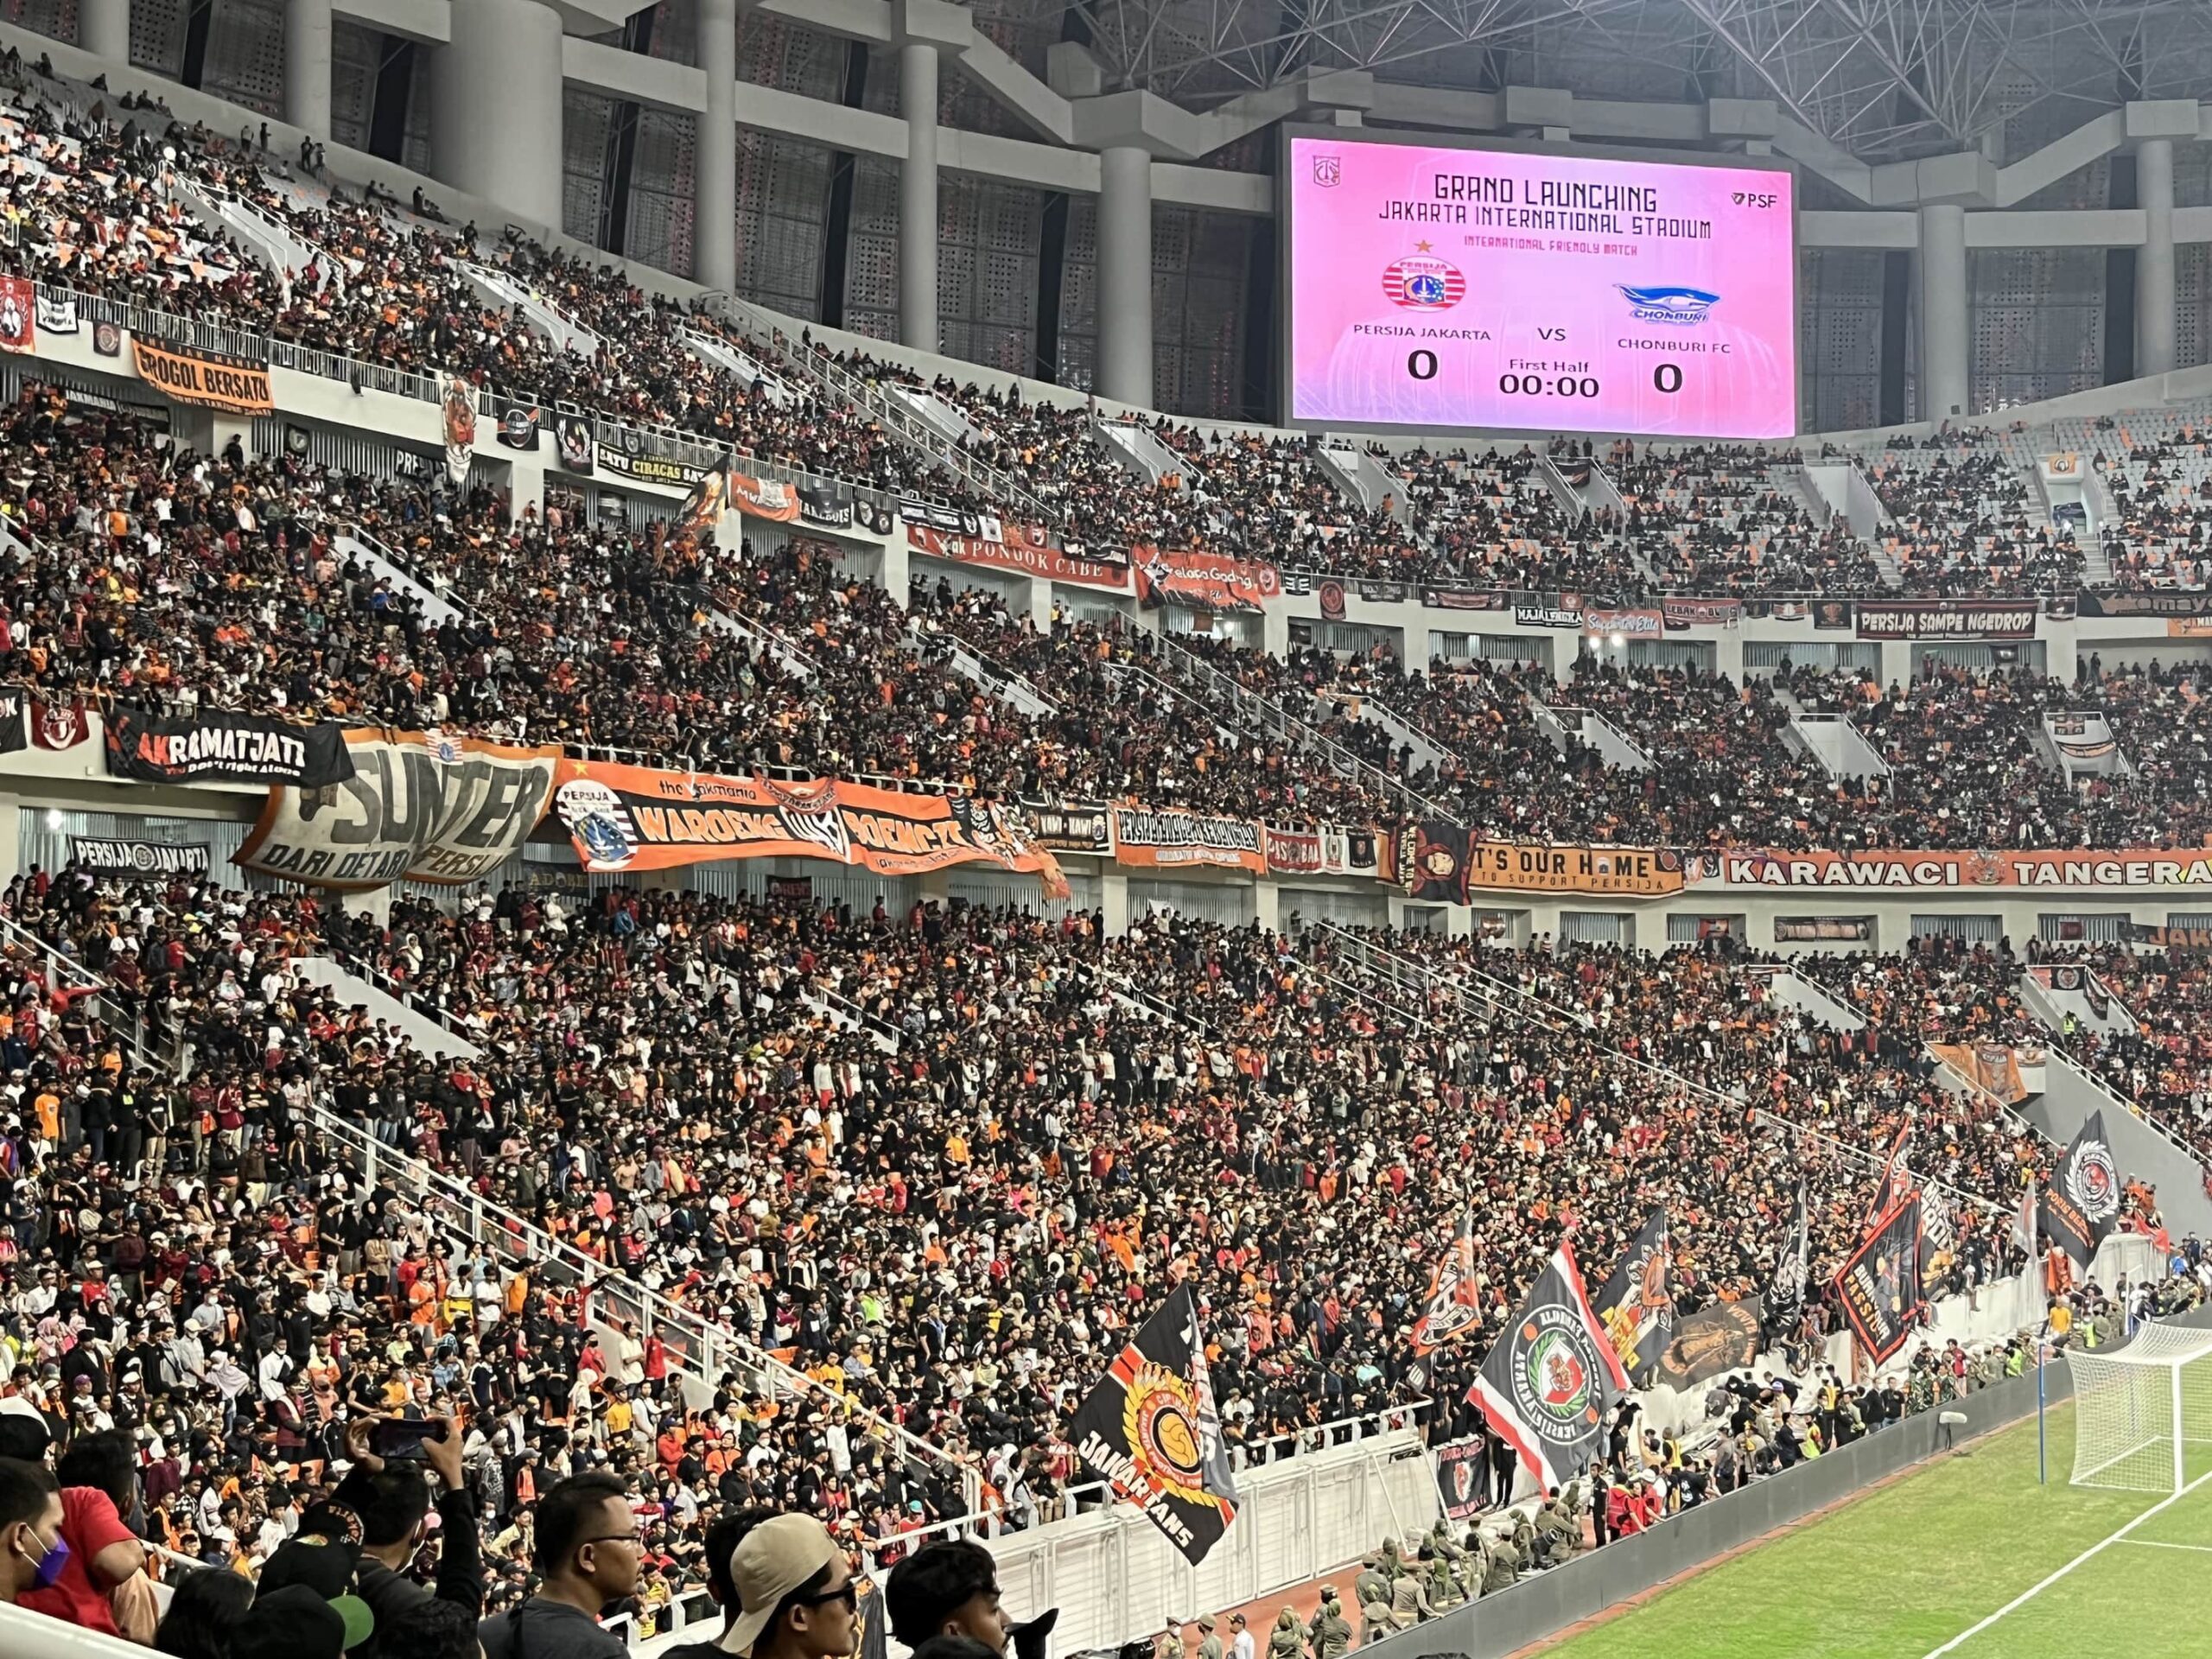 Foto: Jakarta International Stadium (JIS)